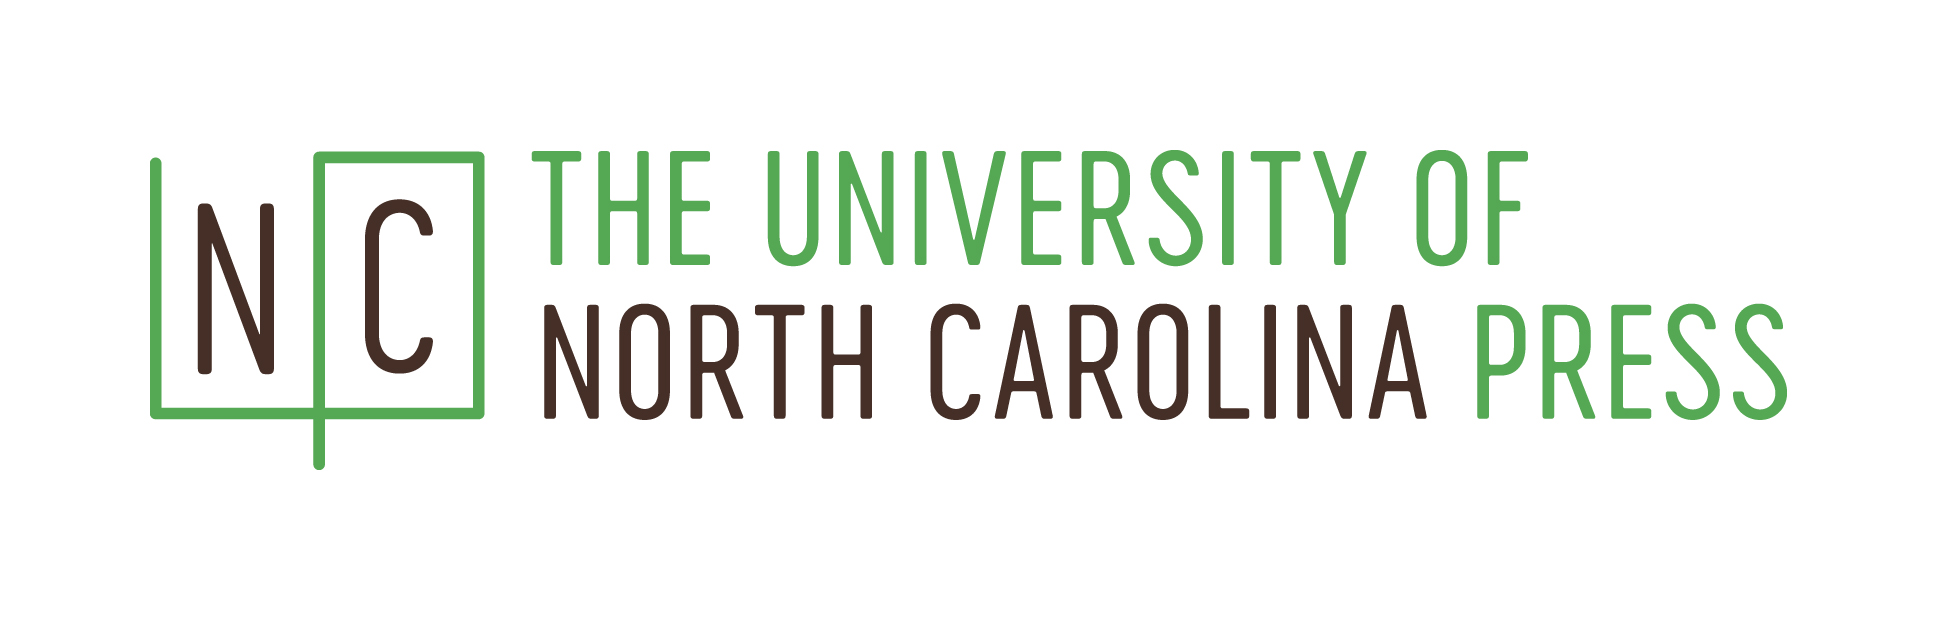 University of North Carolina Press